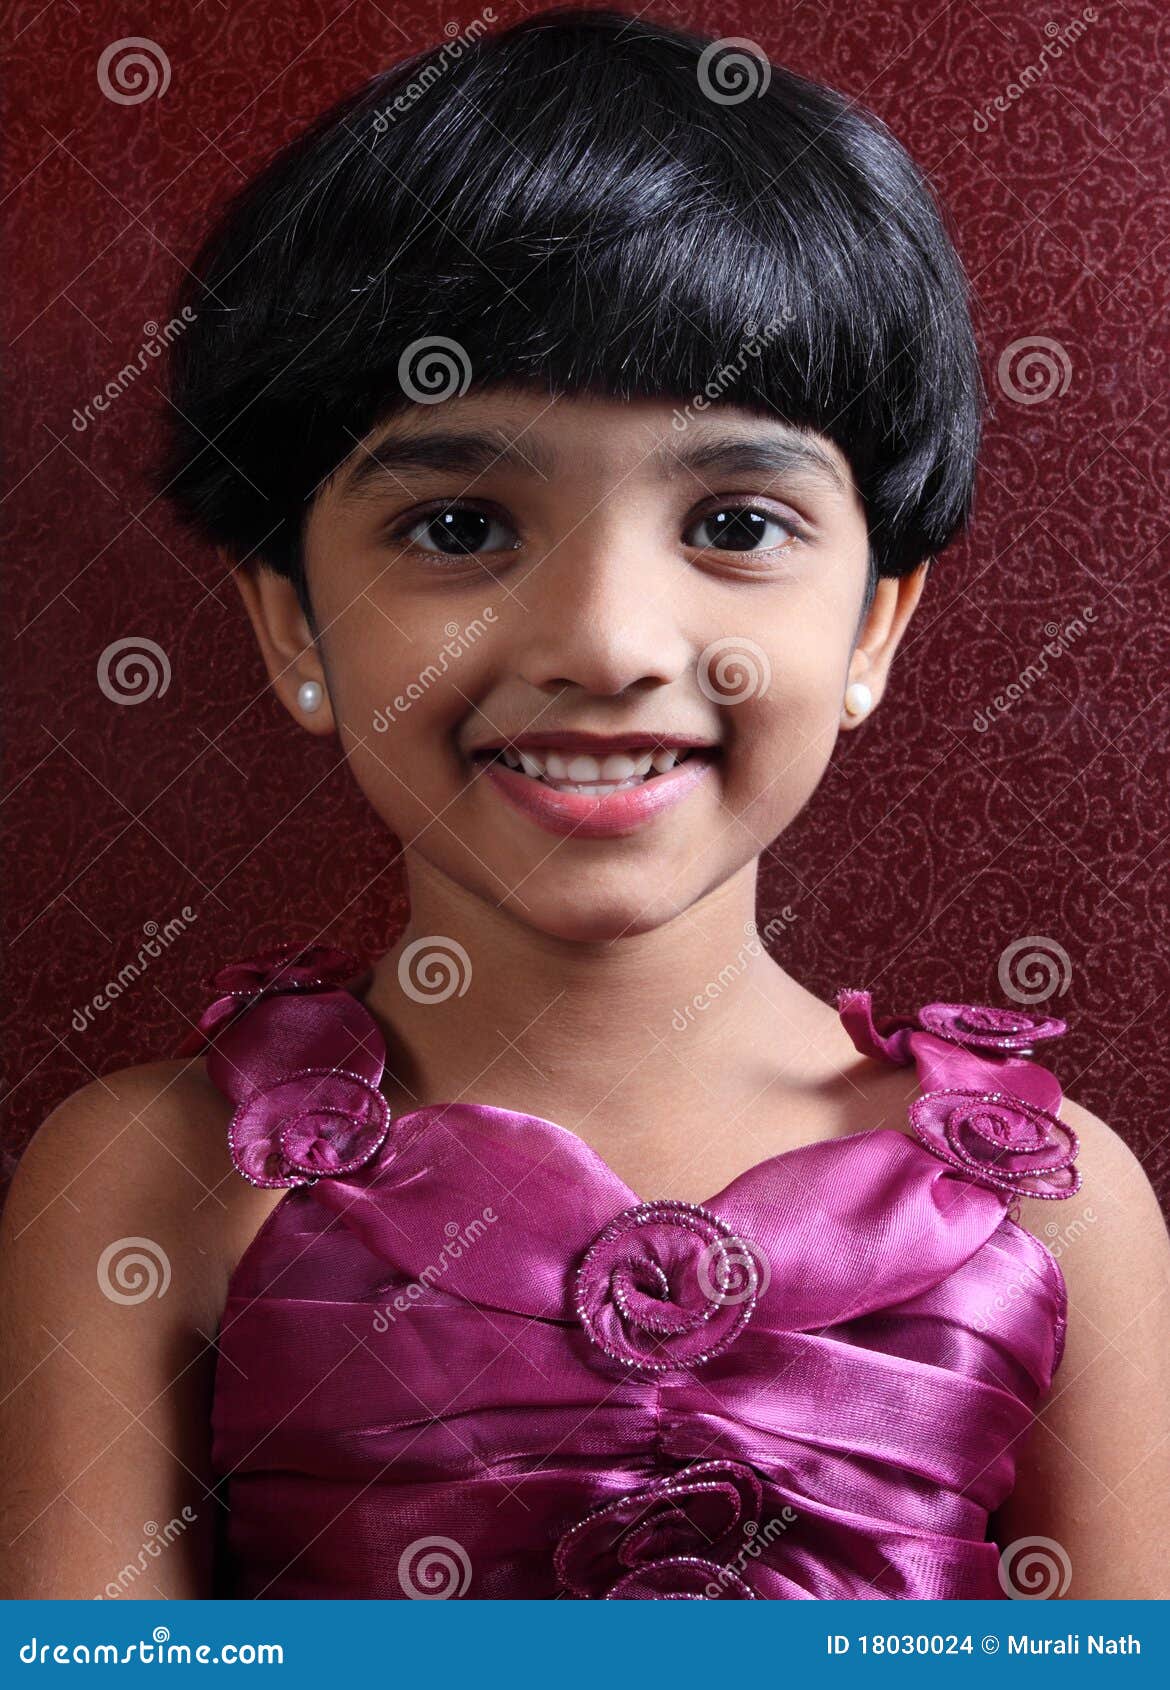 25 best short haircuts for little girls: Long, short, curly hairstyles -  Tuko.co.ke